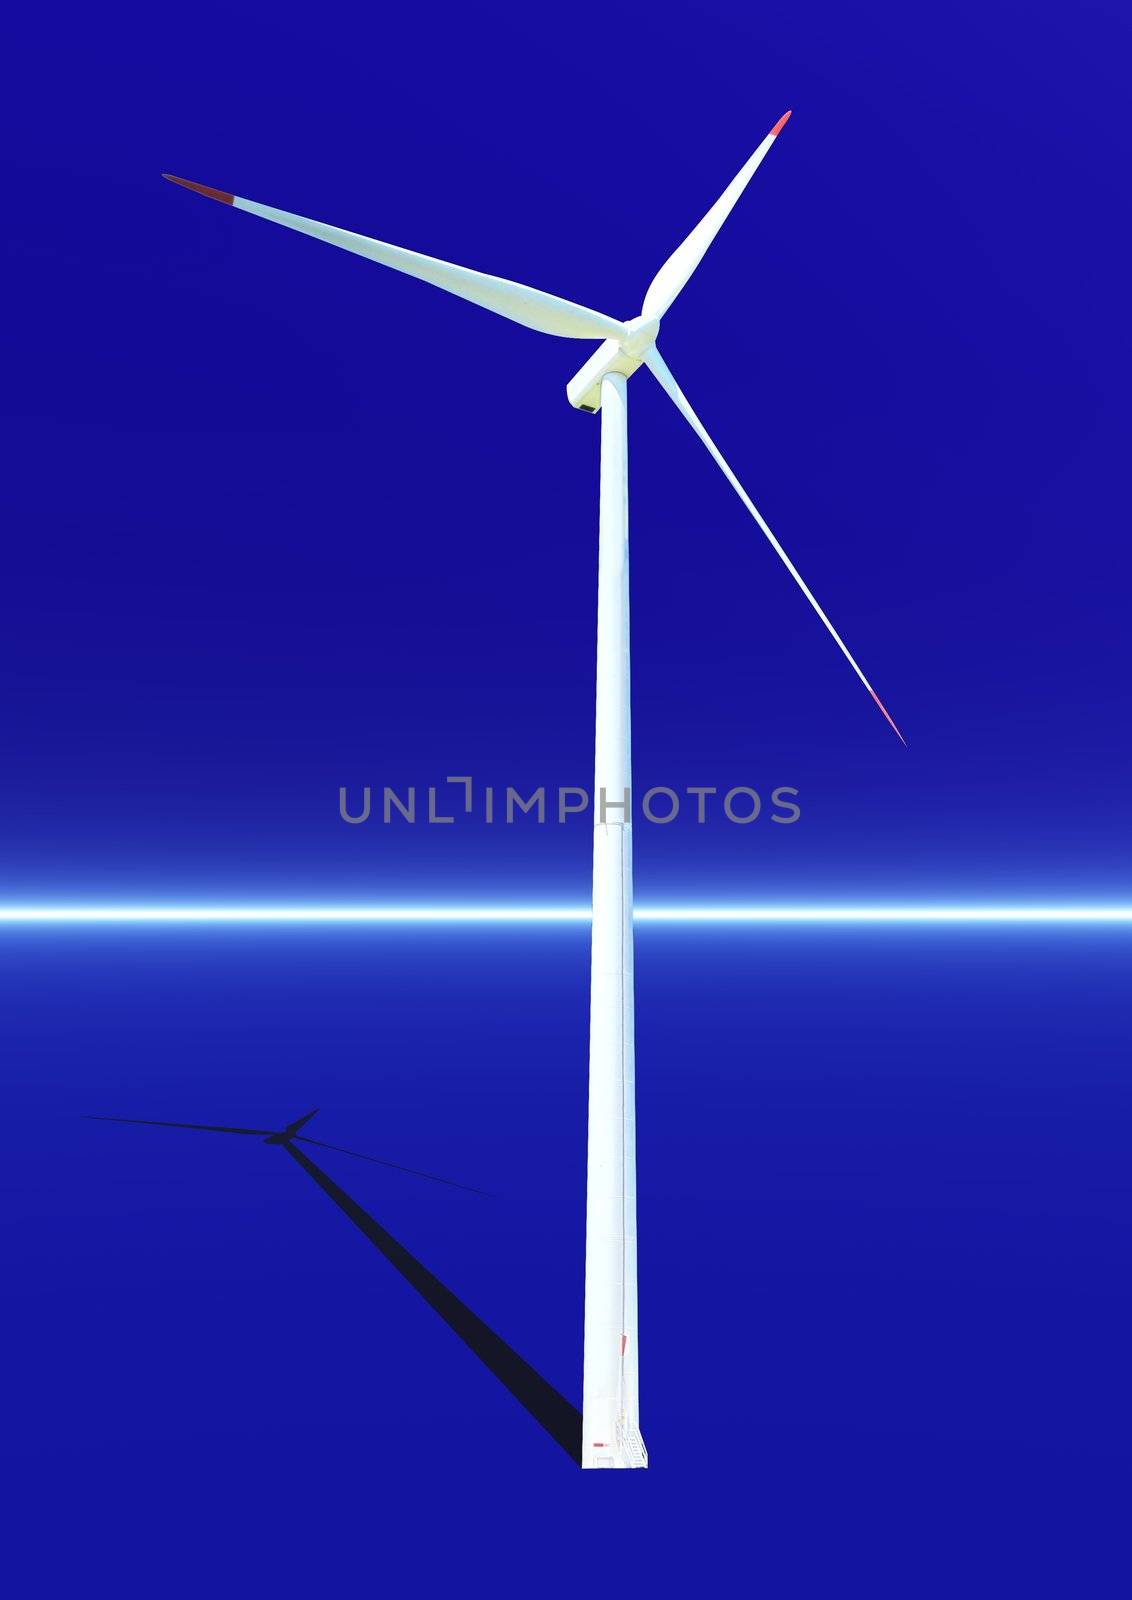 Wind turbine in blue background by Elenaphotos21